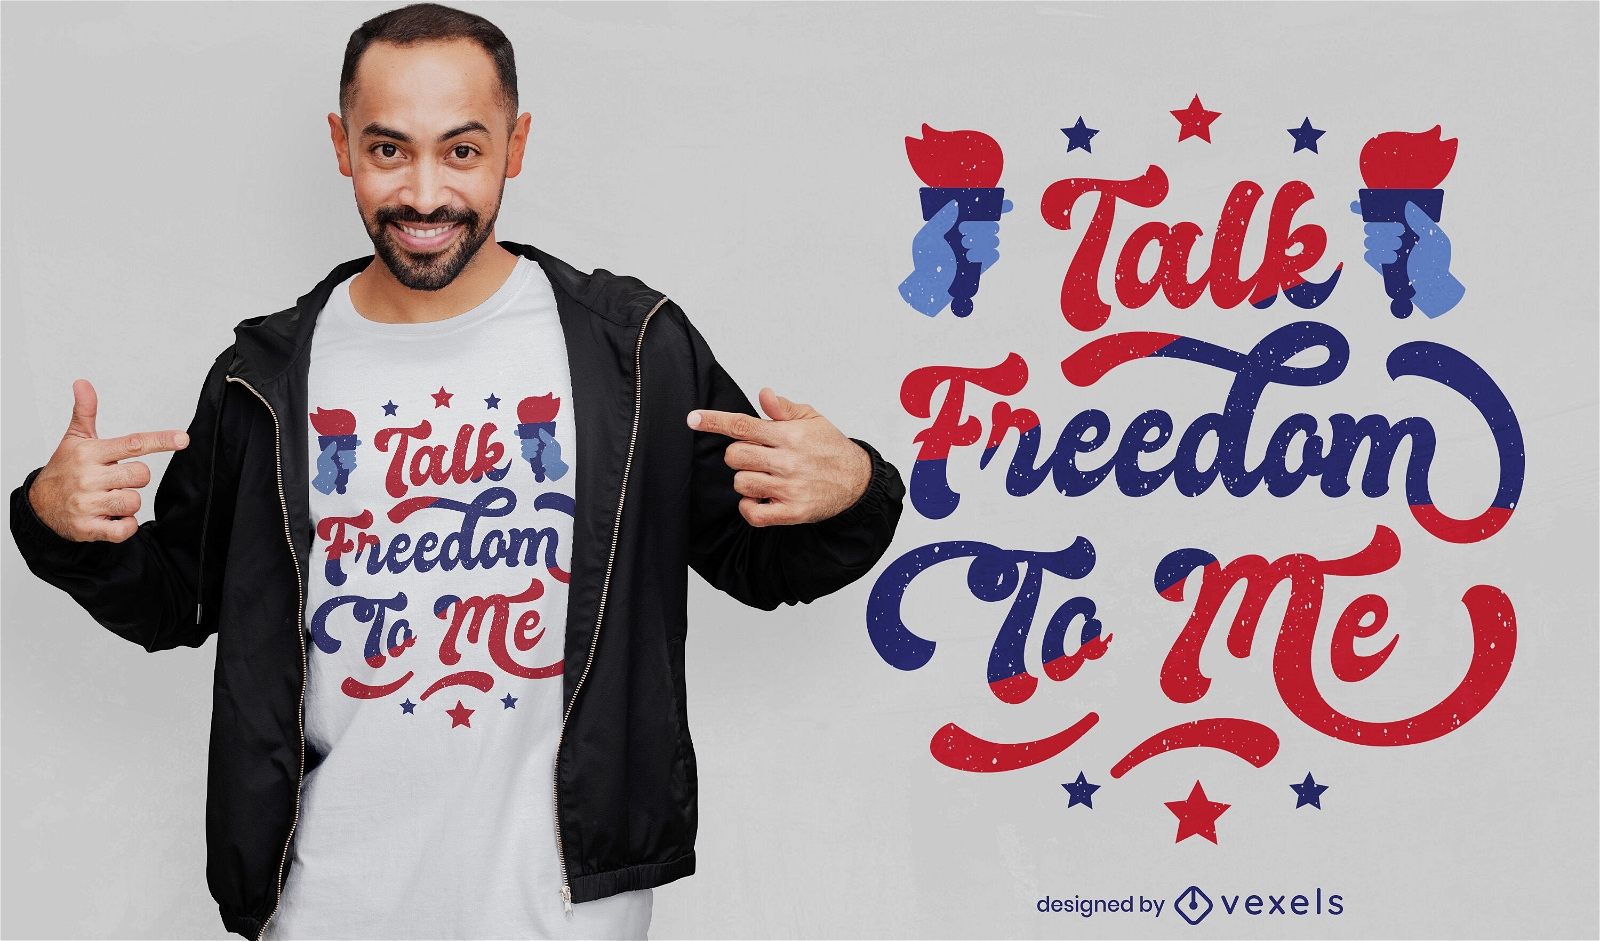 Talk freedom to me t-shirt design